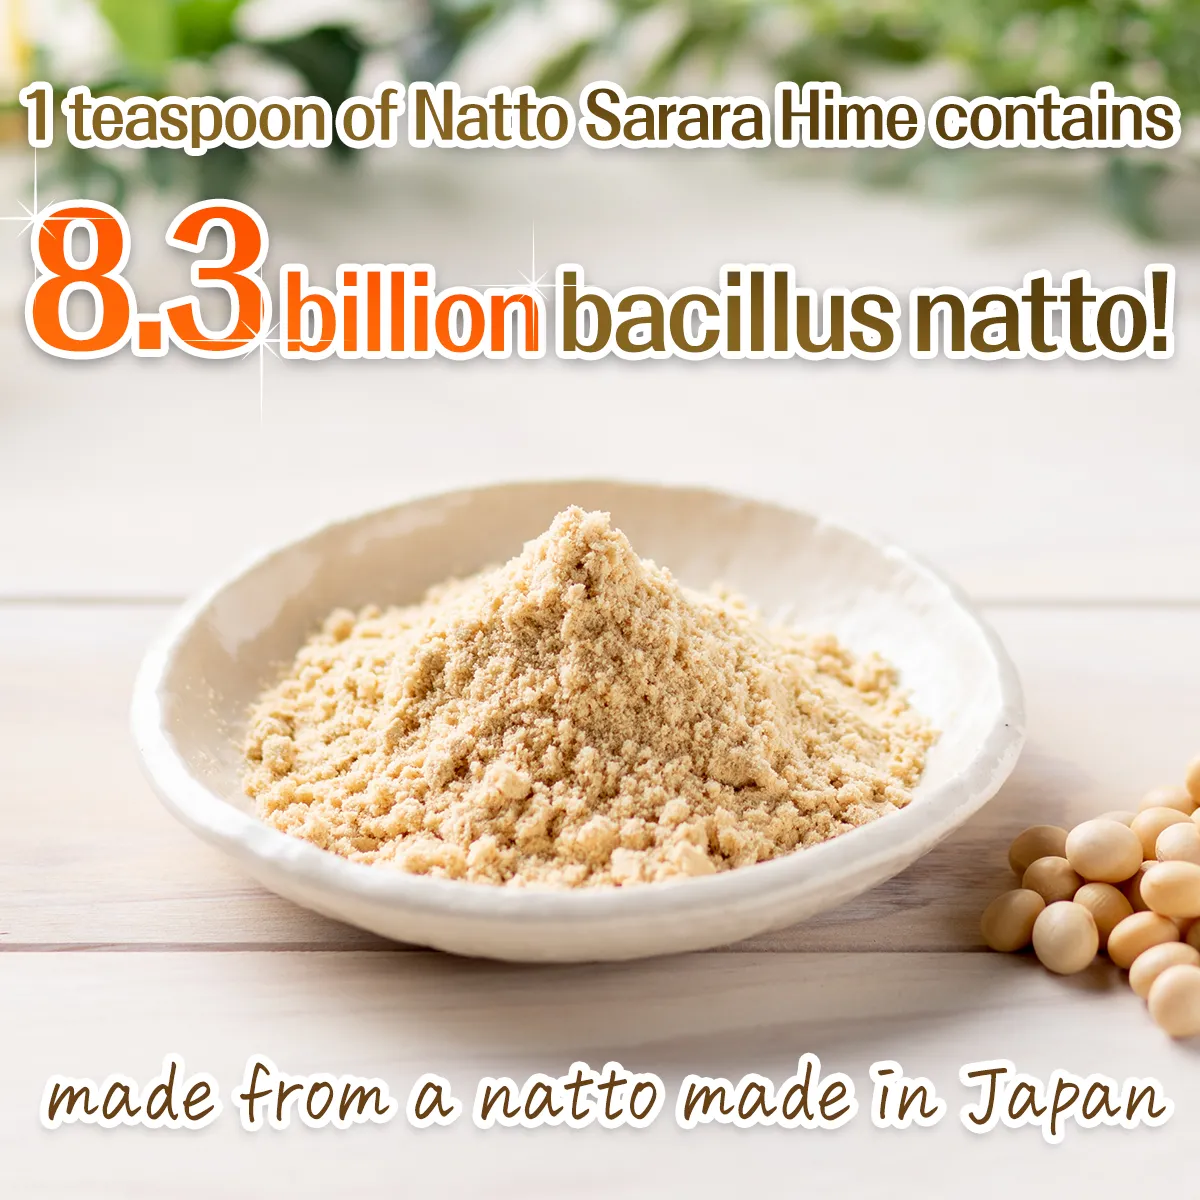 100 million natto bacteria